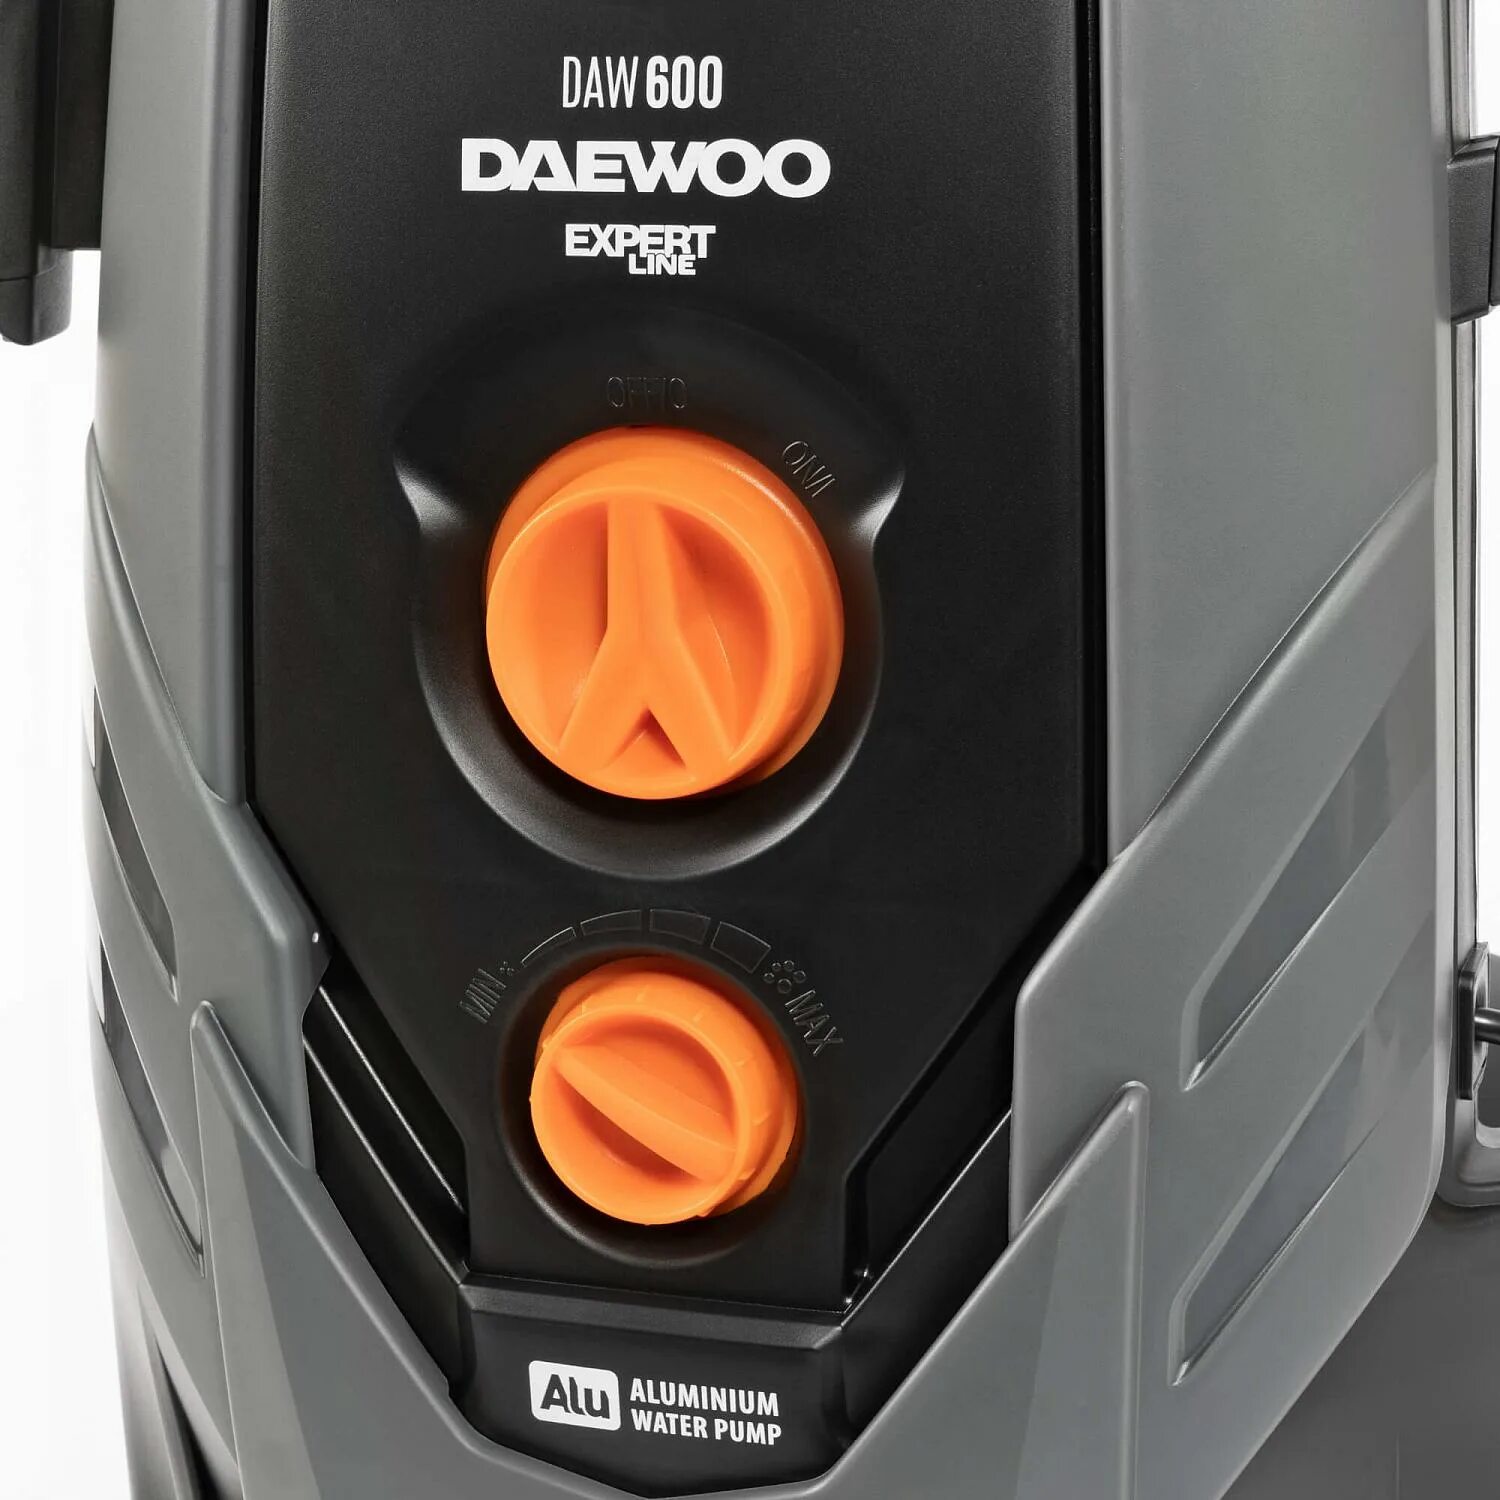 Daewoo daw600. Мойка высокого давления Дэу 600. Daewoo daw600 Expert мойка высокого давления. Мойка высокого давления Daewoo DAW 700. Daewoo power products daw